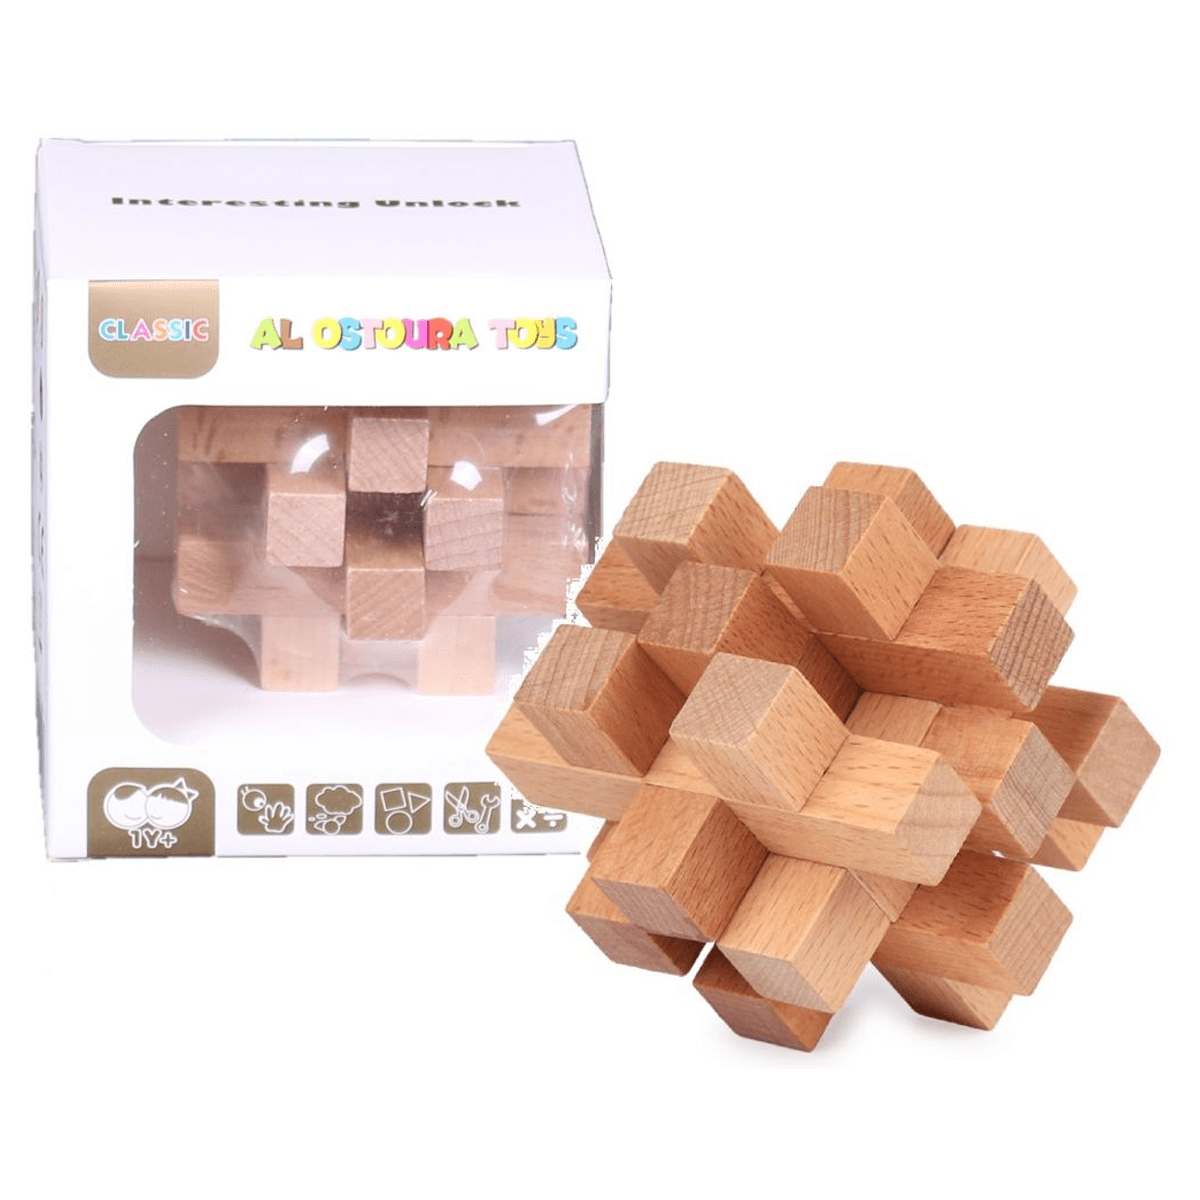 Wooden Educational Toys Interesting Unlock Wooden AB205